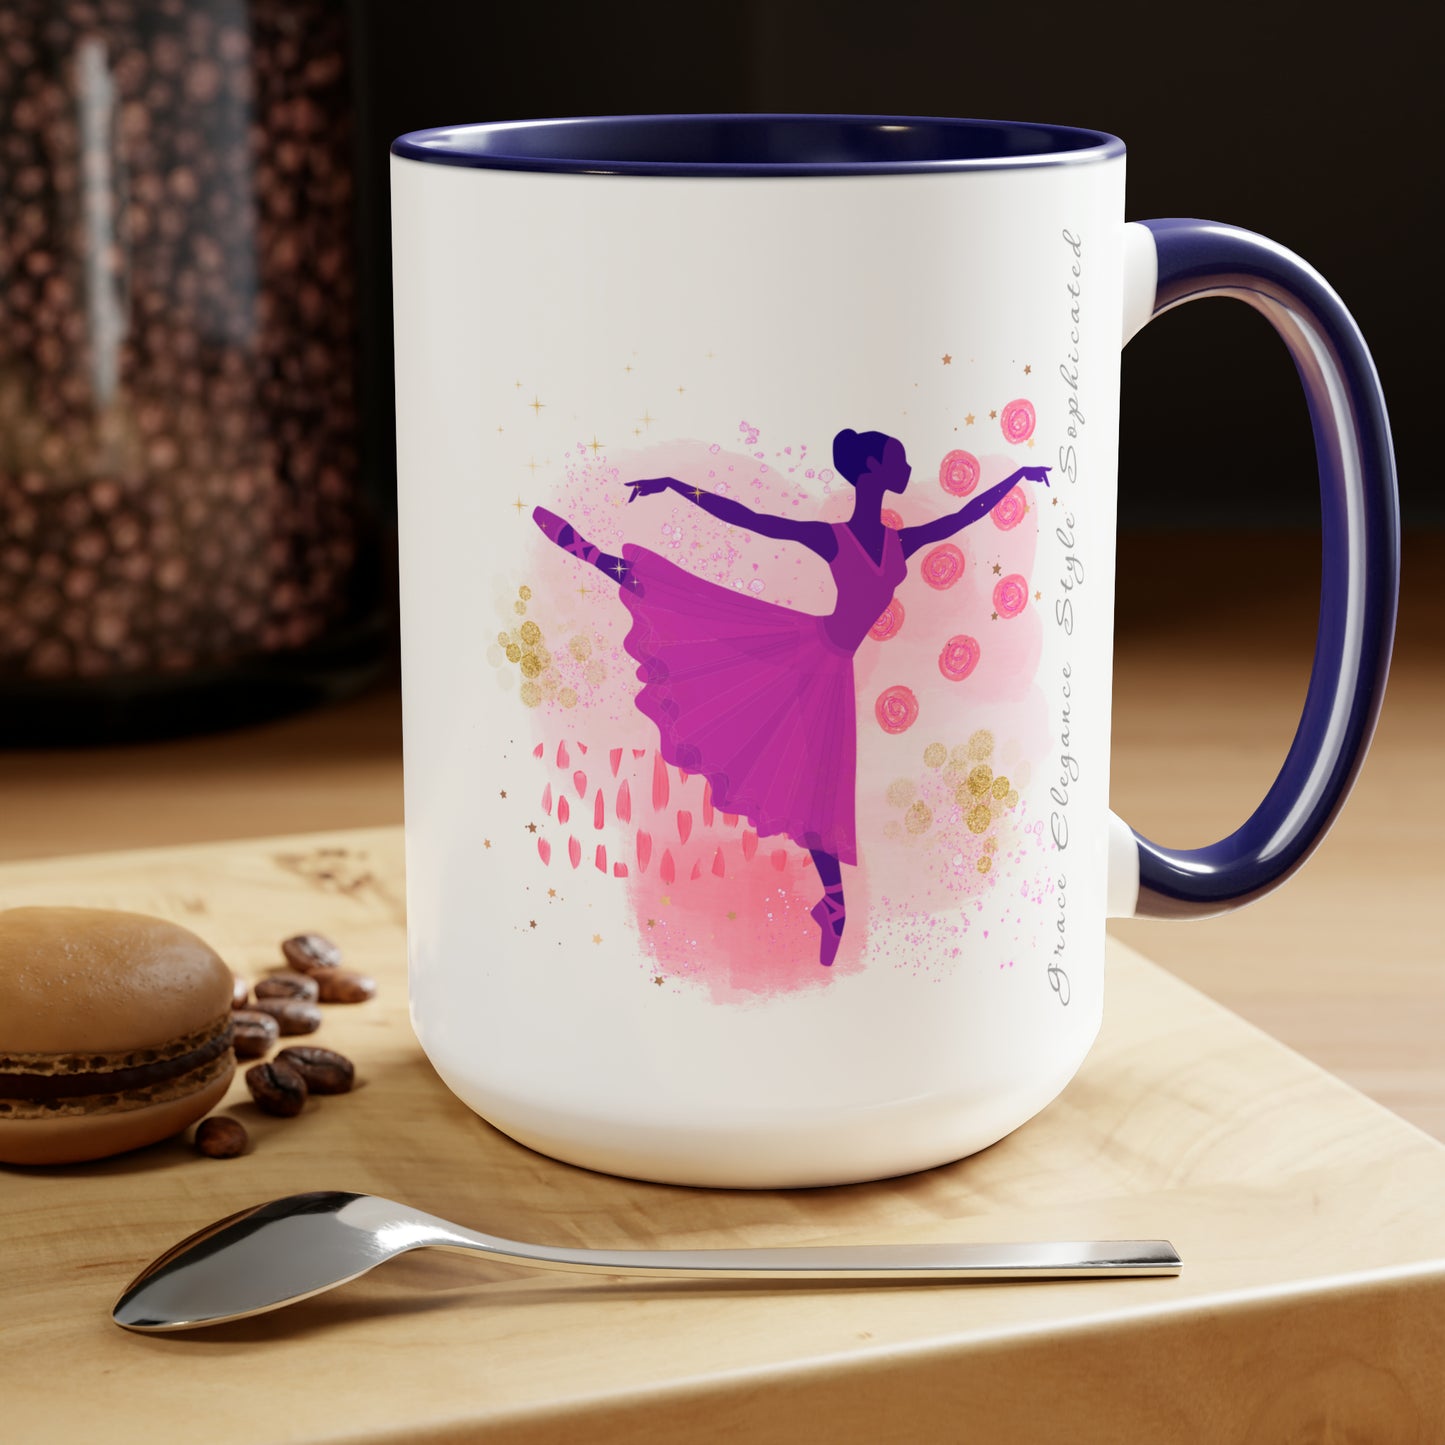 Two-Tone Coffee Mugs, 15oz - Sophisticated Ballerina - royal blue rim